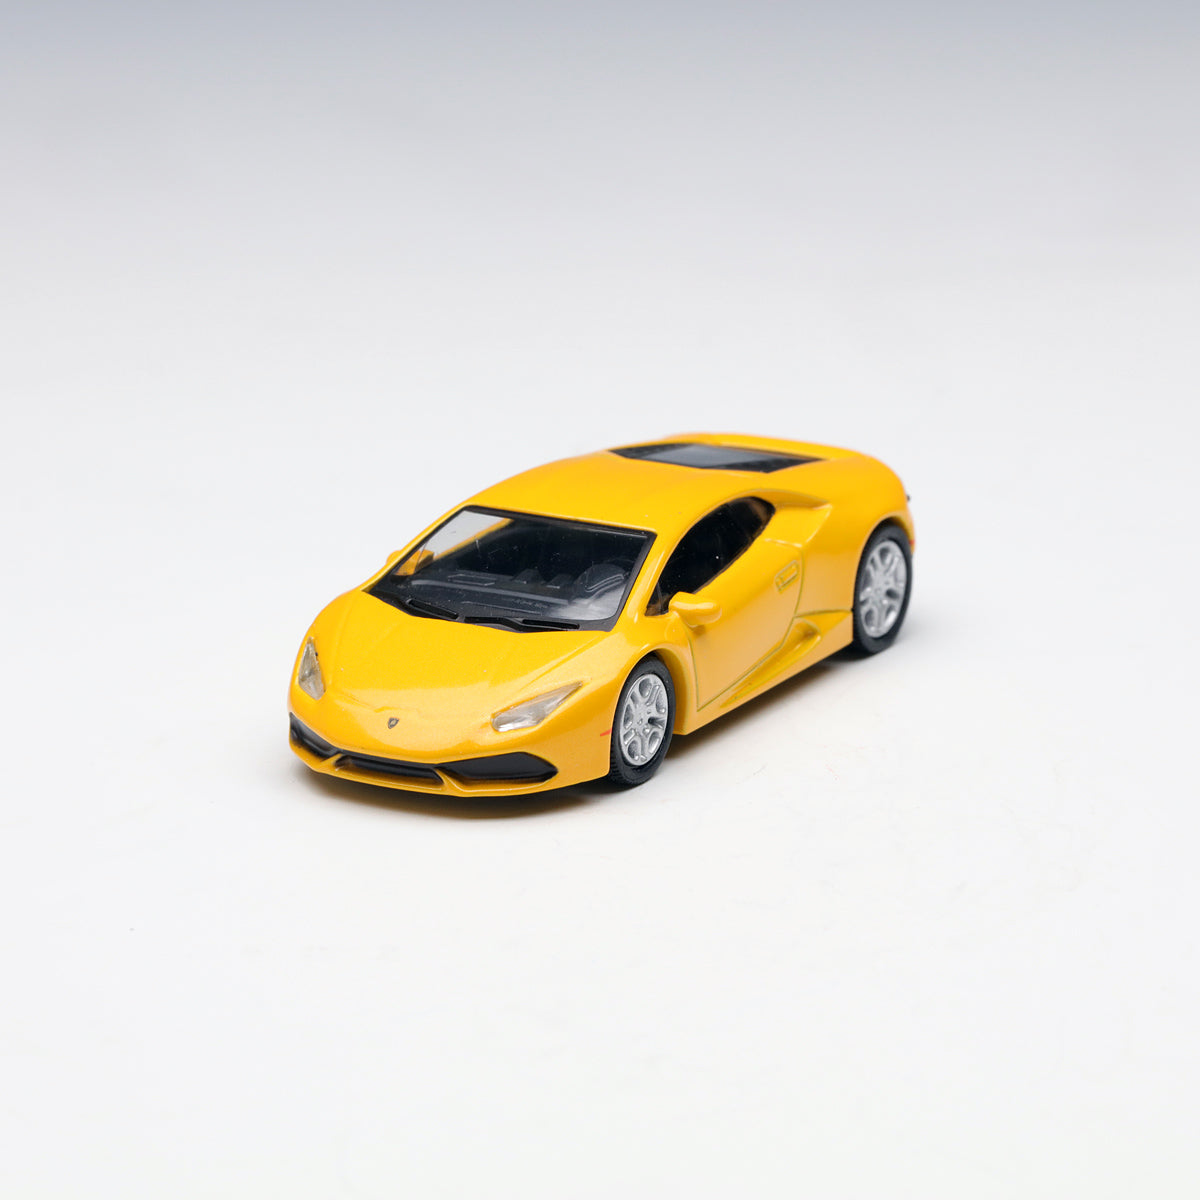 Schuco 1:64 Lamborghini Huracan yellow 452012300